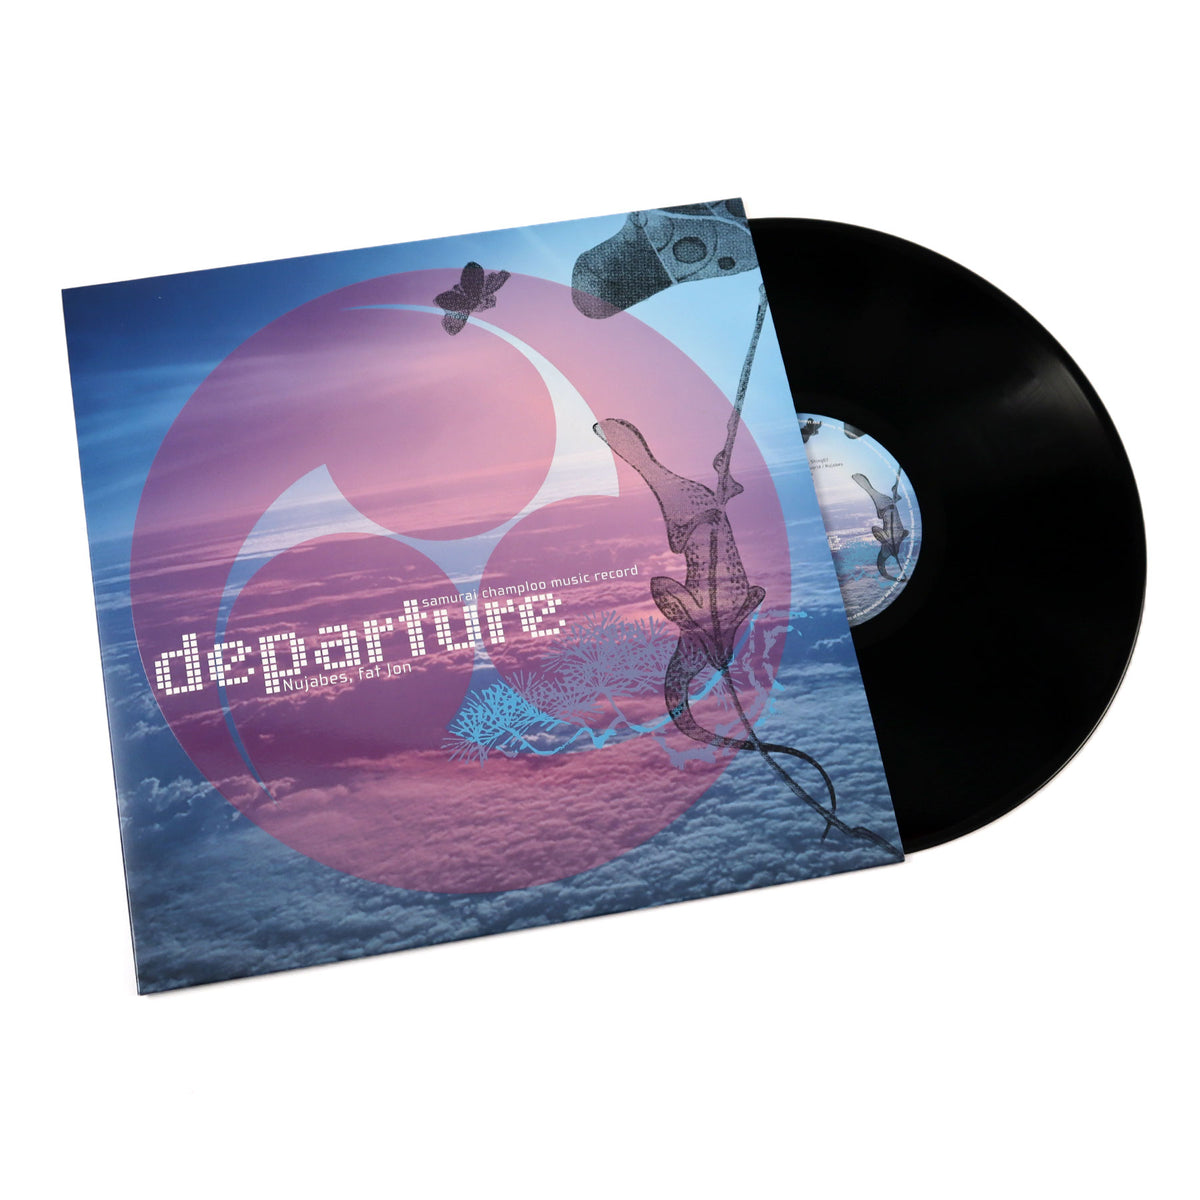 Samurai Champloo Music Record: Departure (Nujabes, Fat Jon) Vinyl